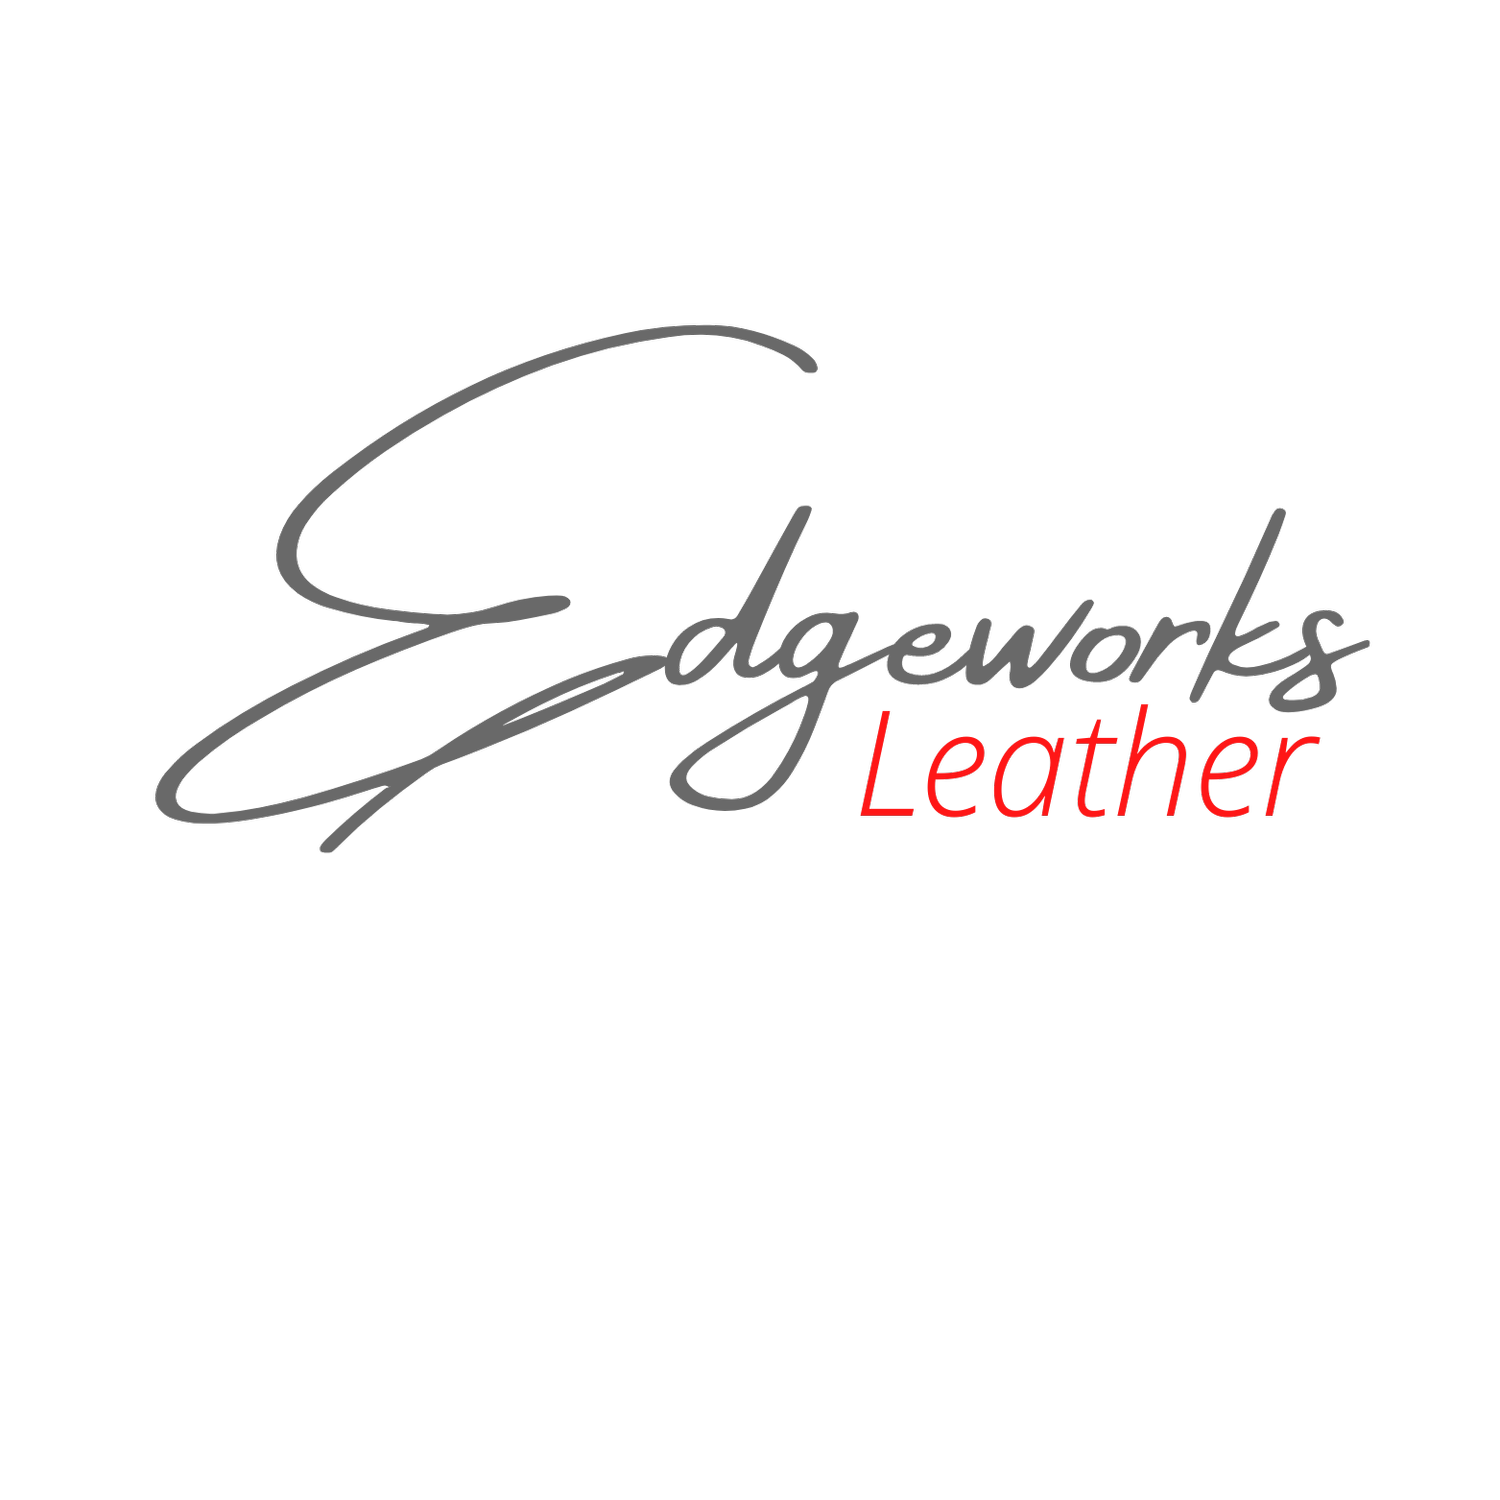 Edgeworks Leather